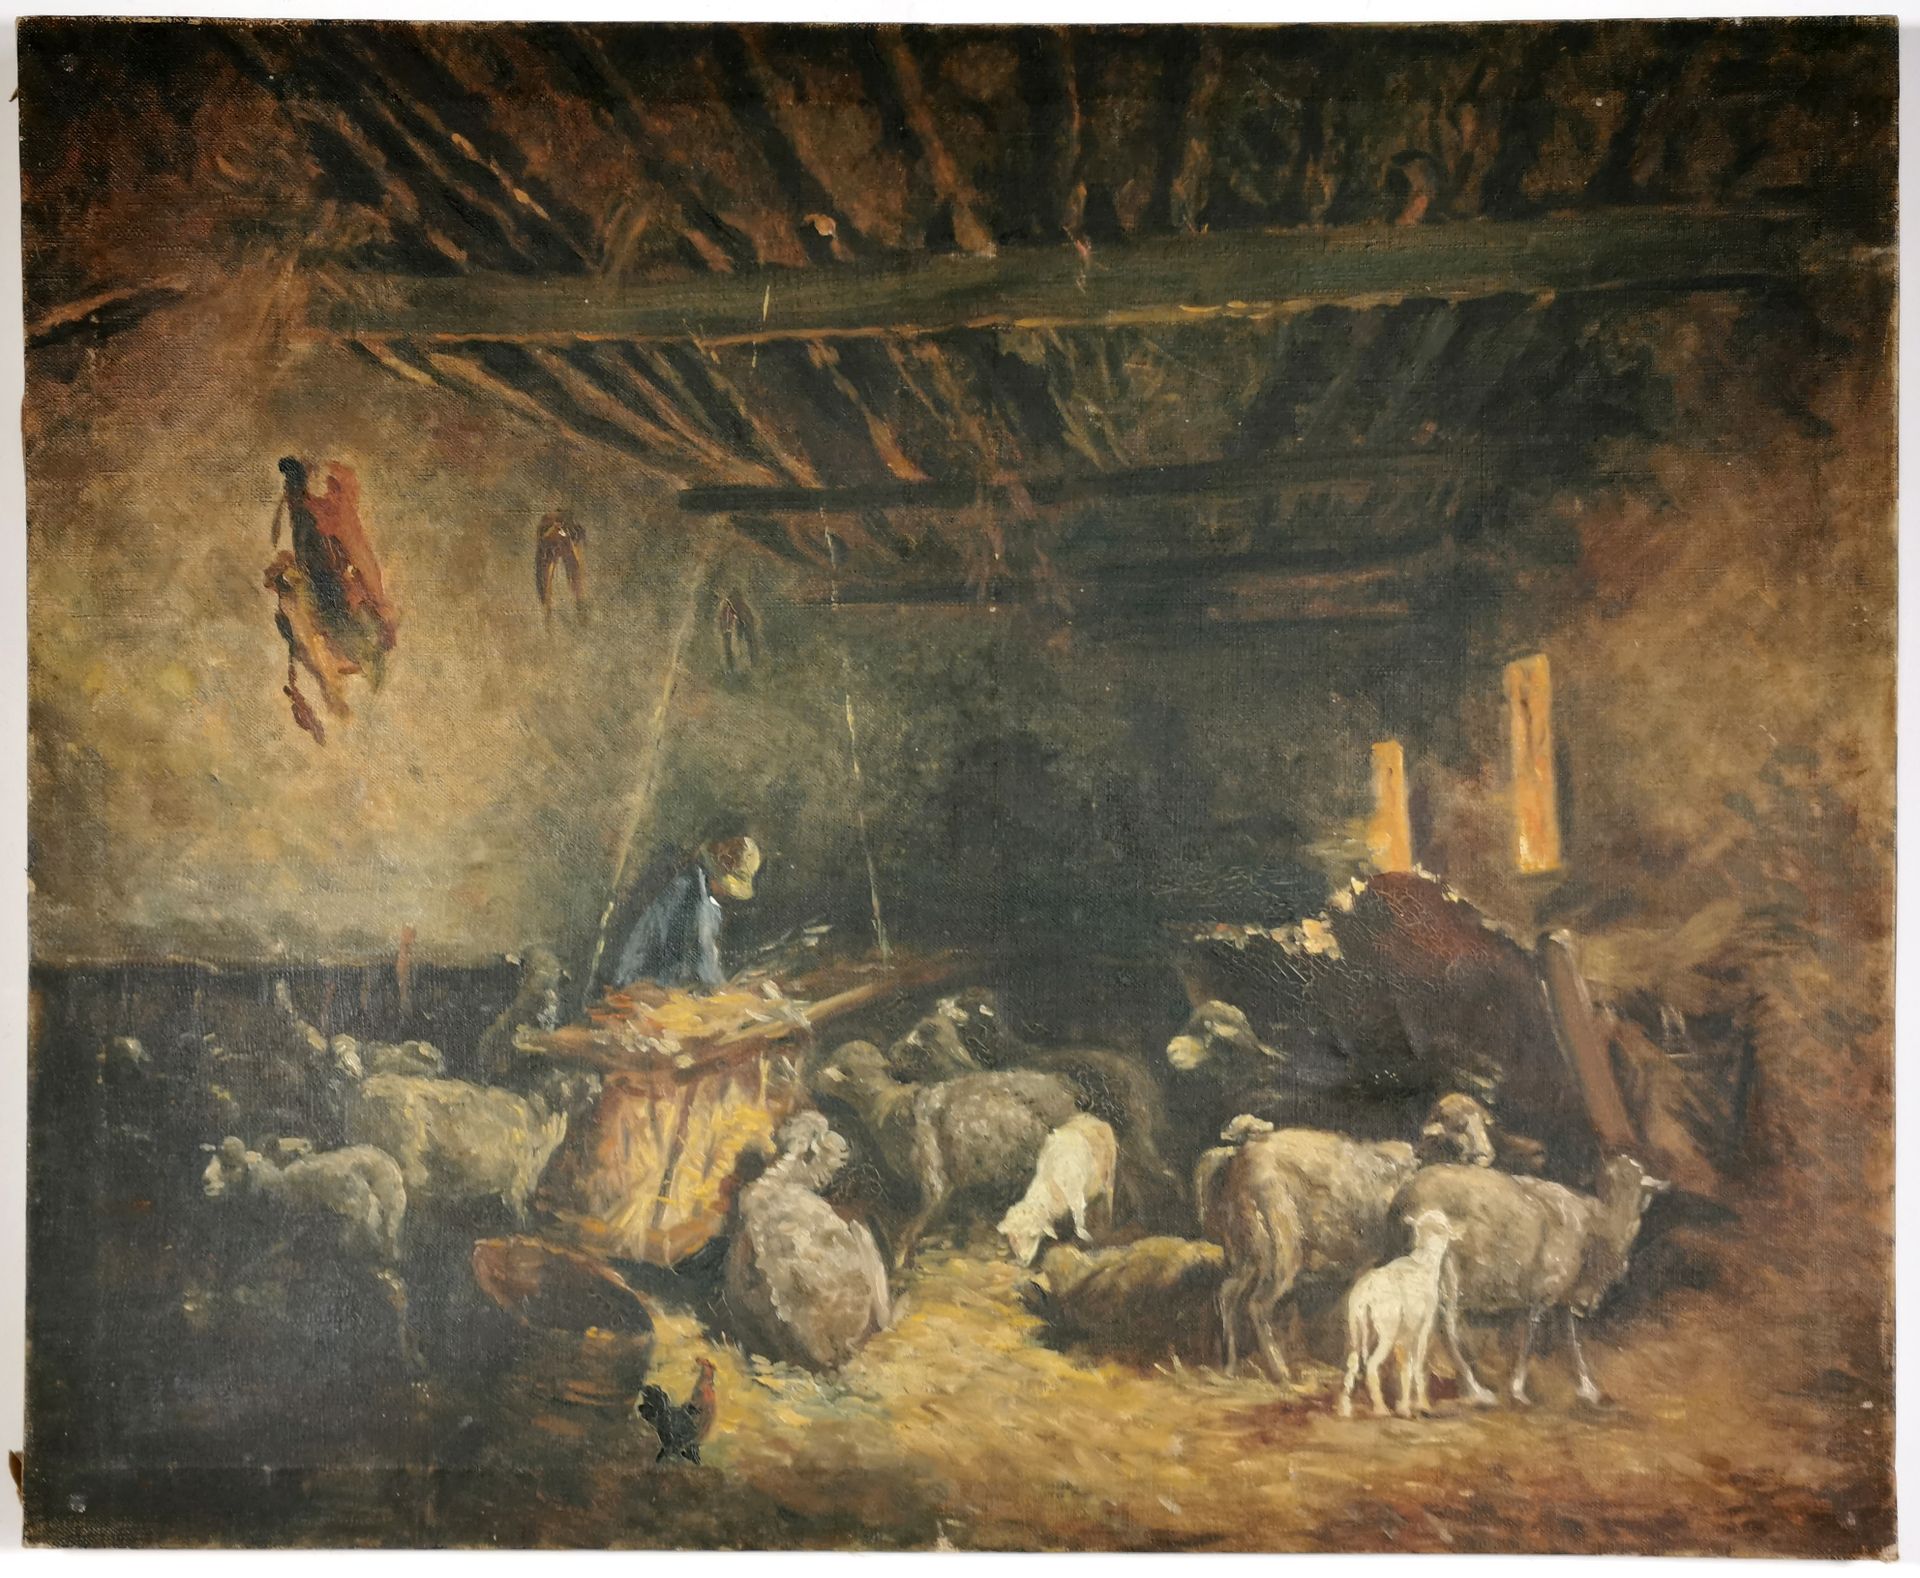 Null 20世纪上半叶的学校

羊圈

布面油画

47.2 x 62.2 厘米

内页